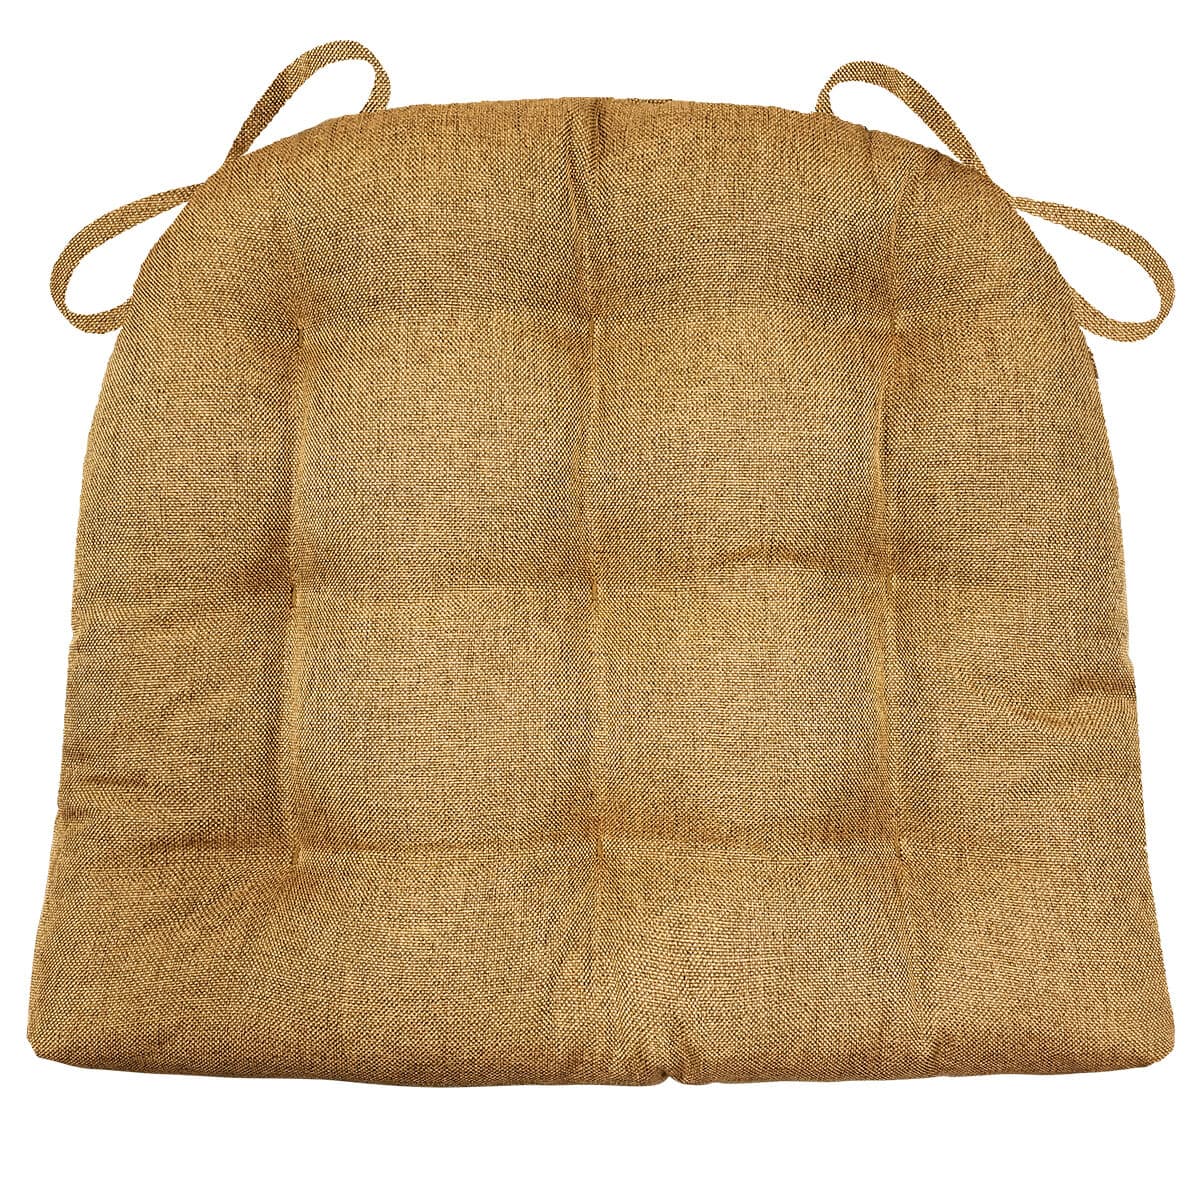 Hayden Copper Dining Chair Cushions | Barnett Home Decor | Copper - Rust - Natural